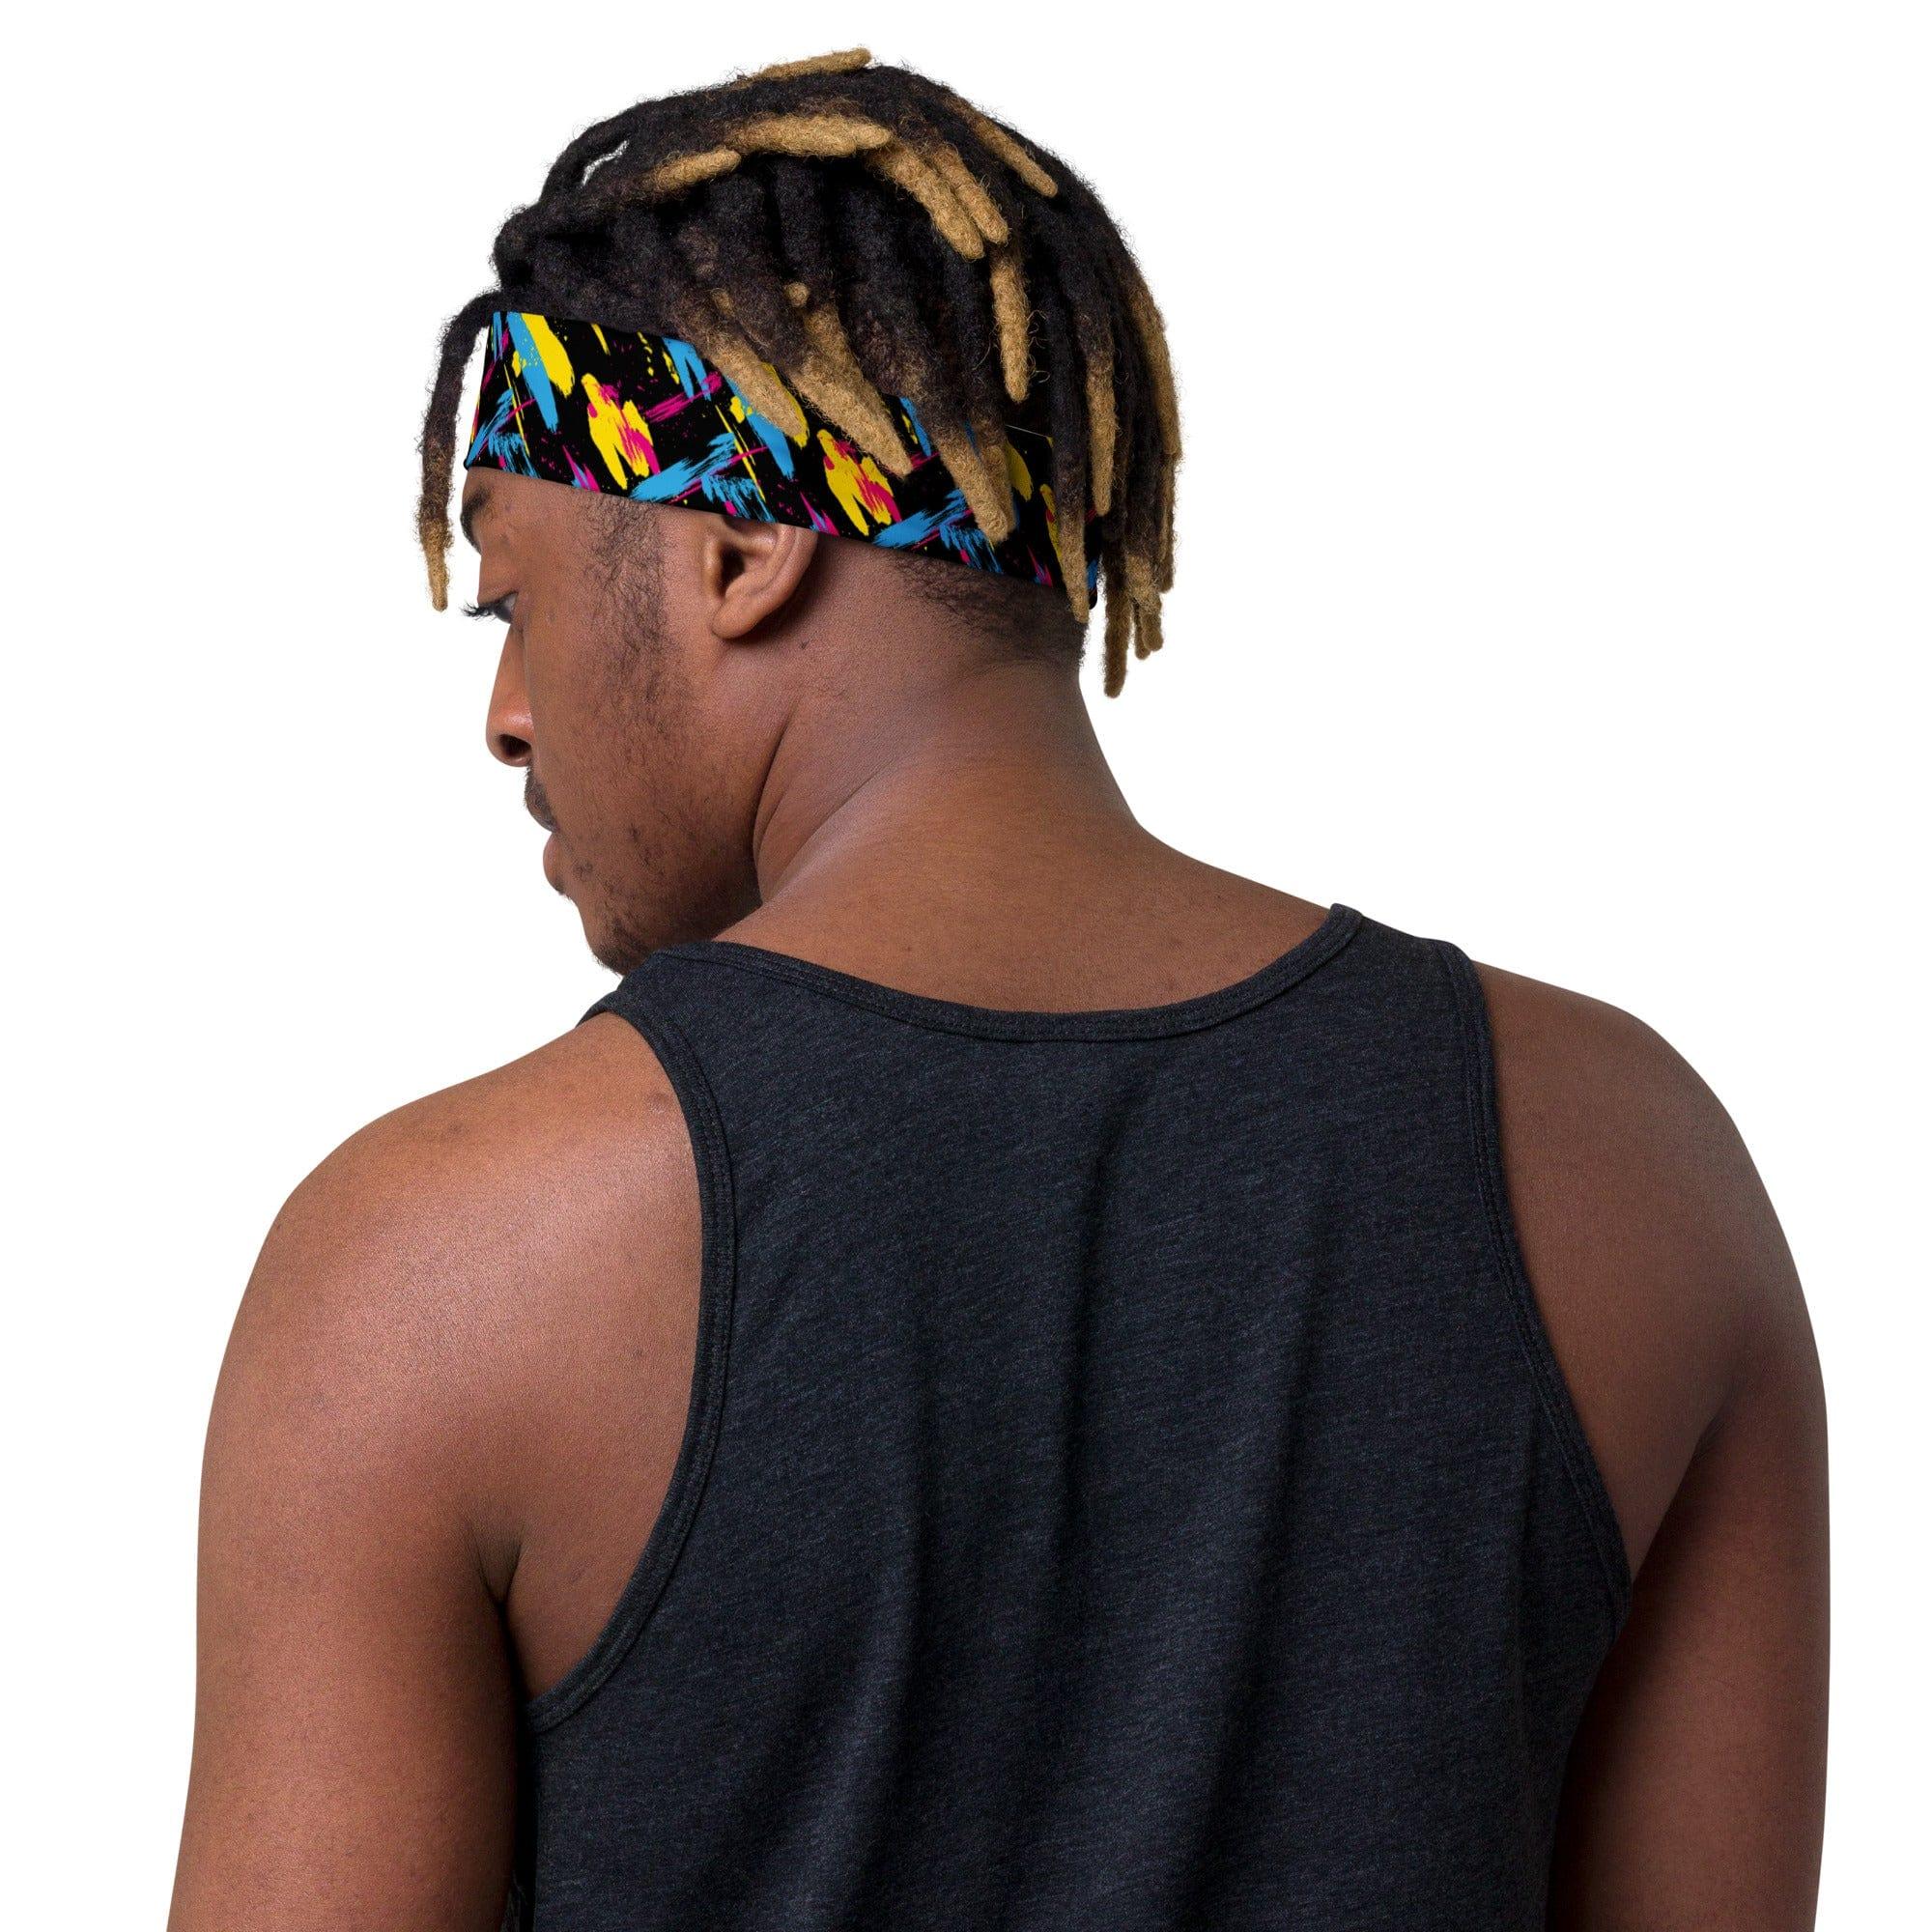 Headbands for men || Iconic 80's Aerobics Pattern Quick Dry Headband - TopKoalaTee